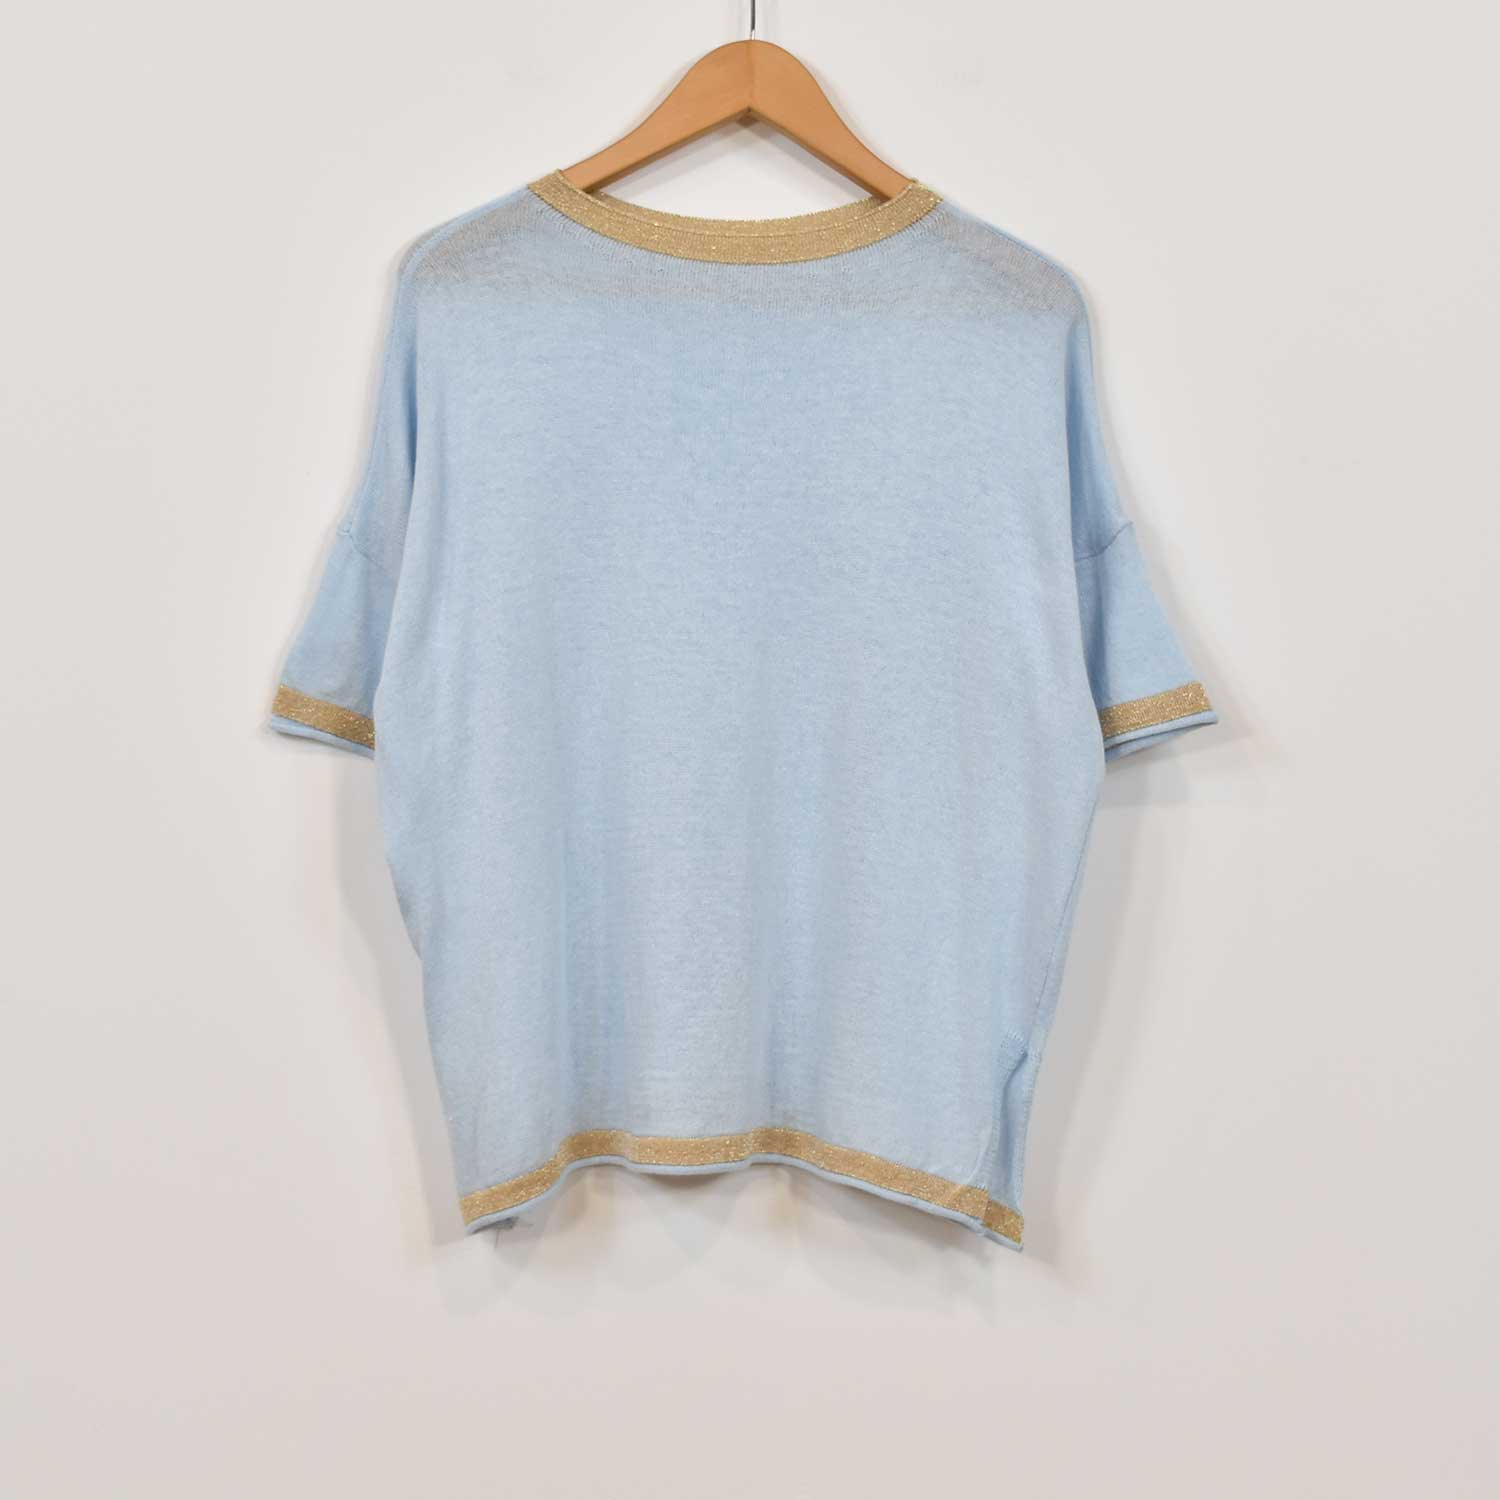 Blue shiny trim sweater